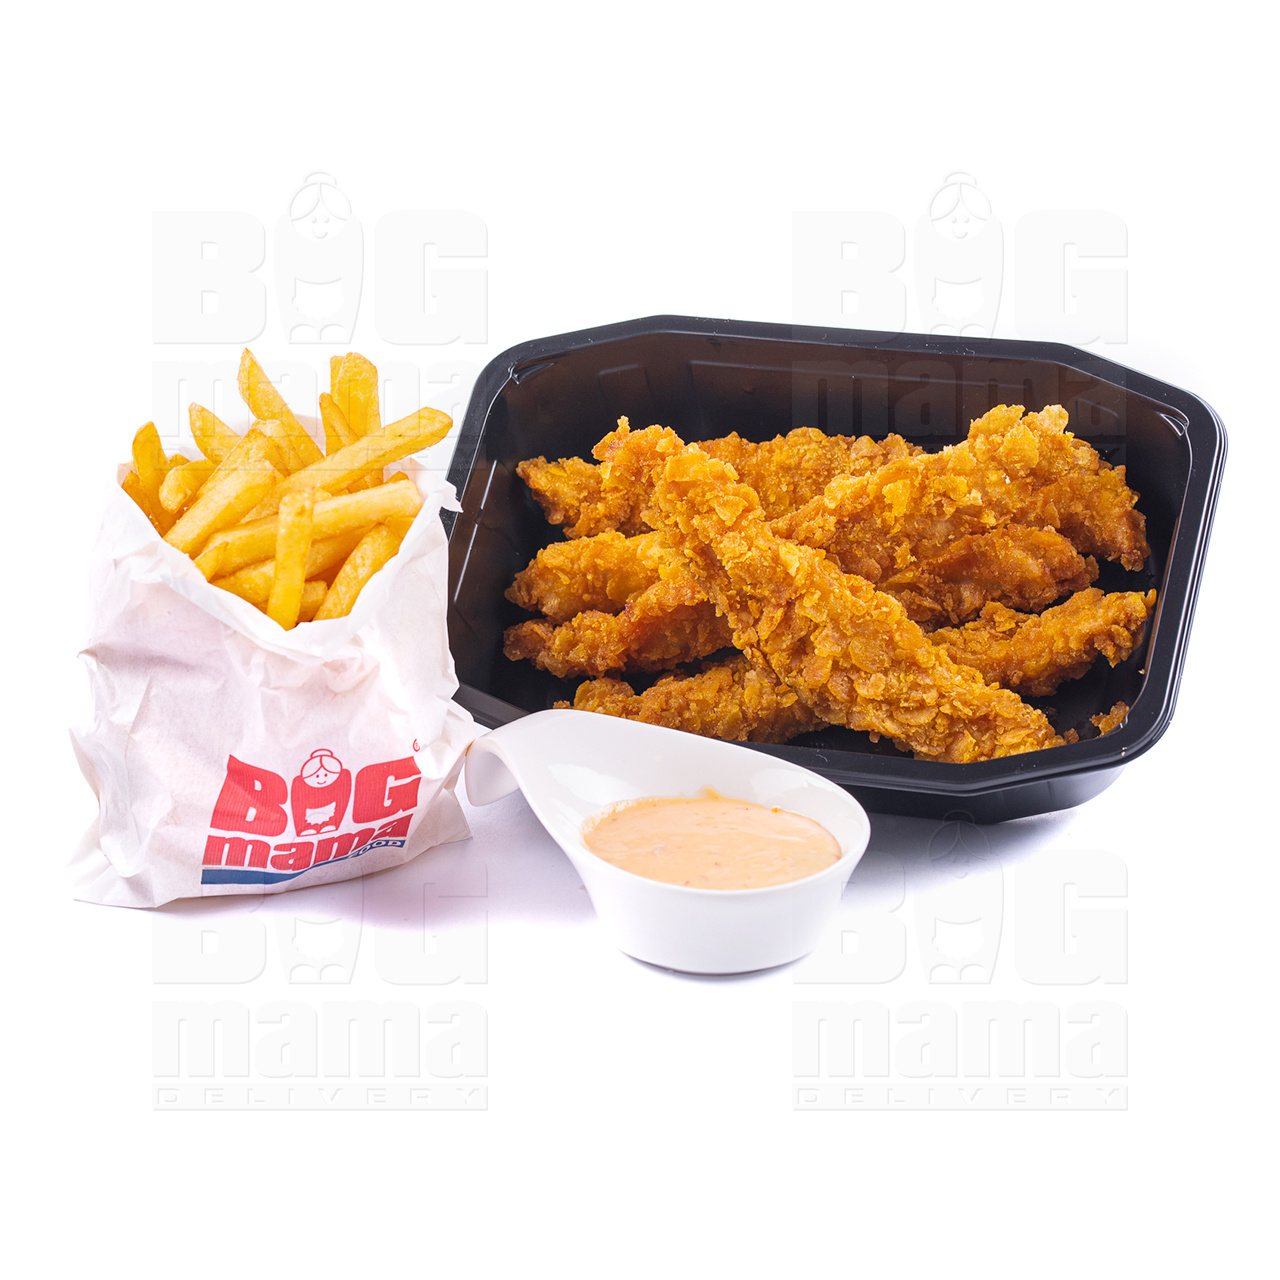 Product #230 image - Chicken crispy, french fries, crispy sauce menu